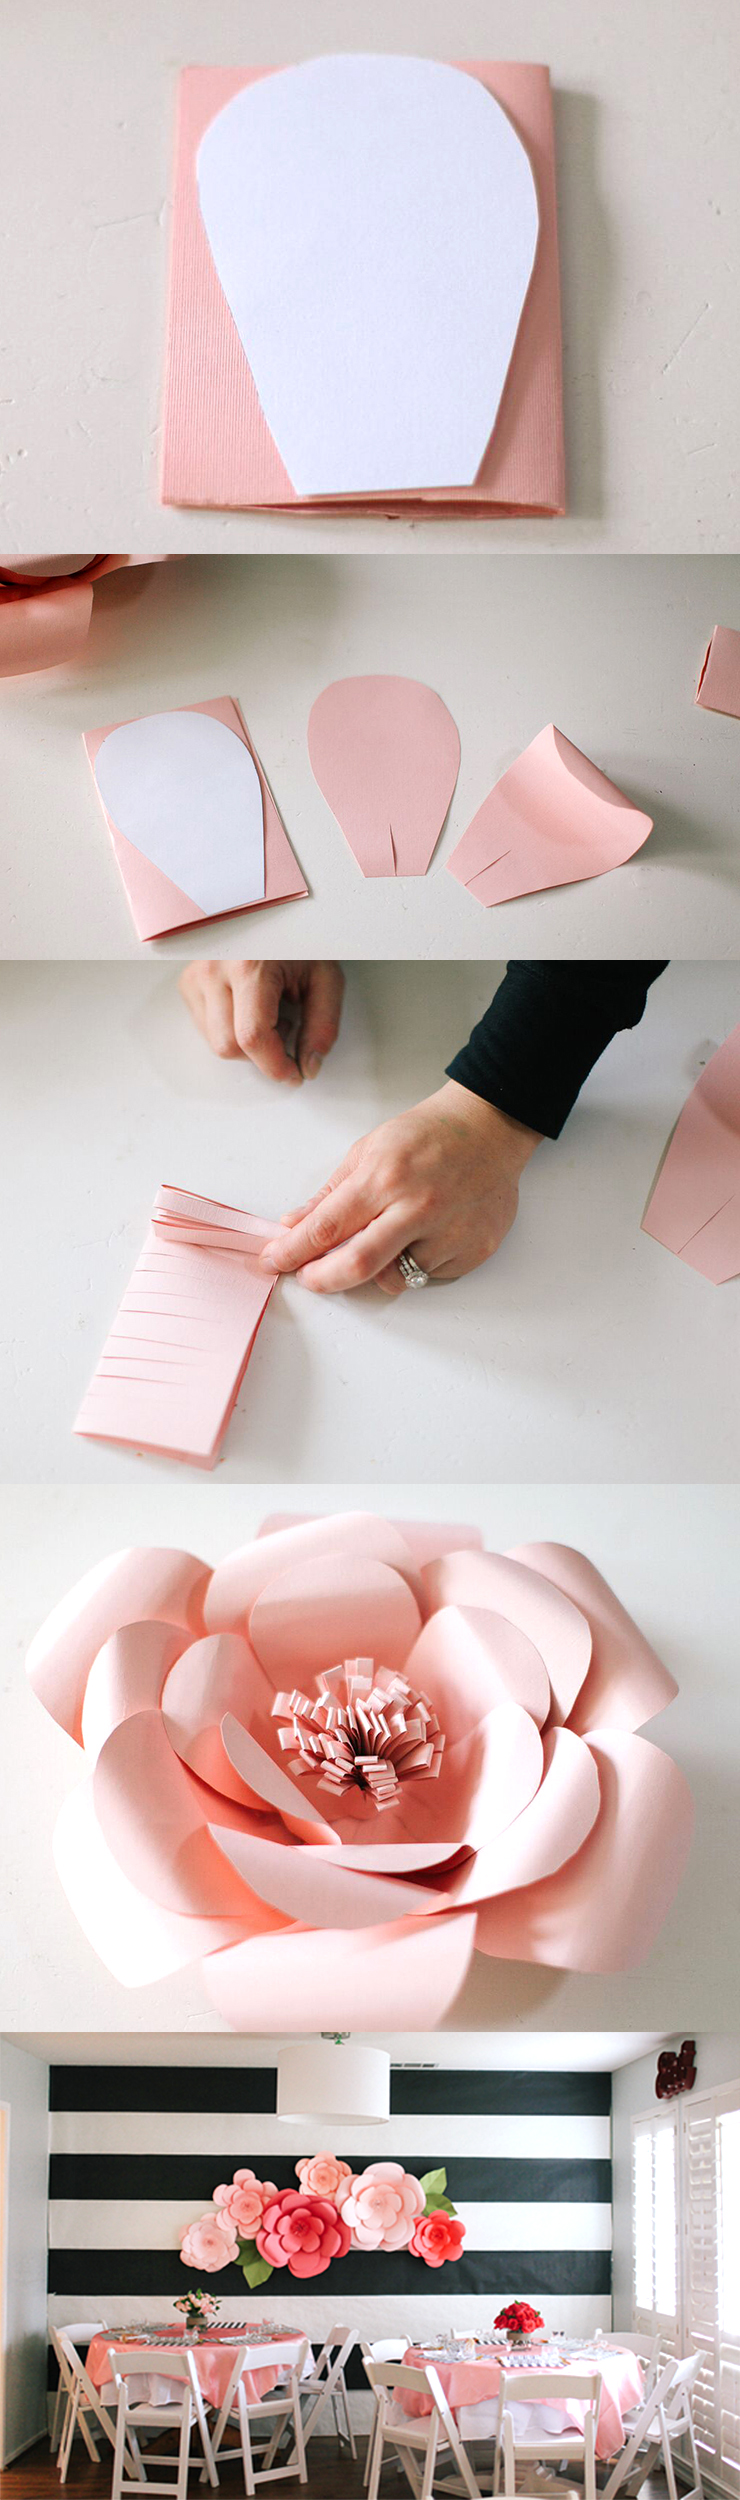 paper-crafts1